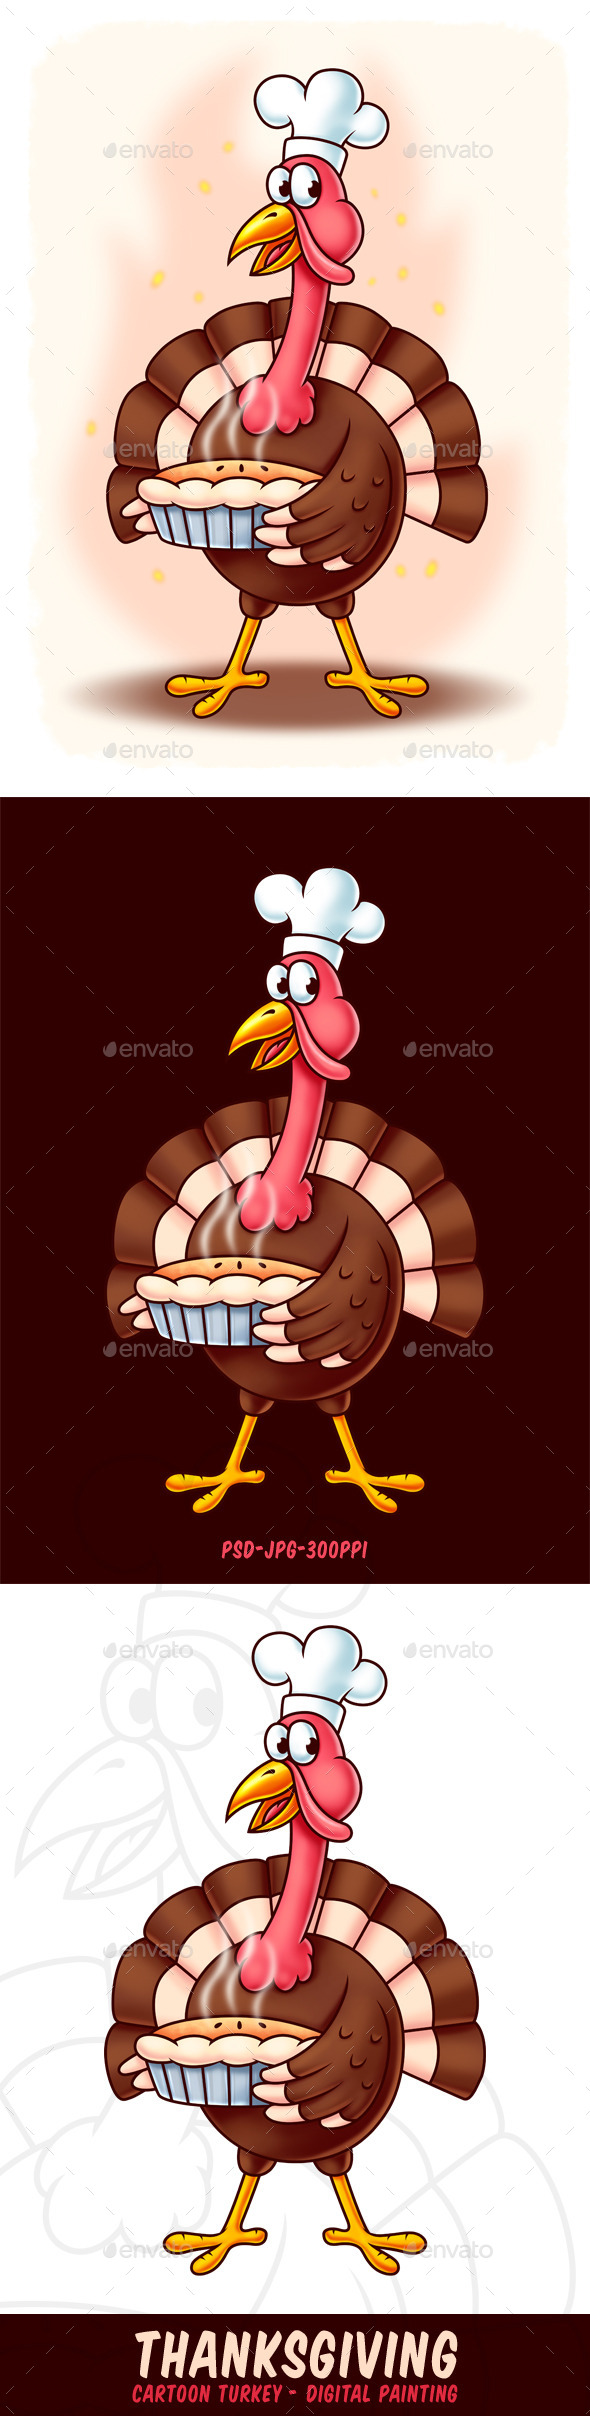 Thanksgiving Cartoon Turkey - Digital Painting